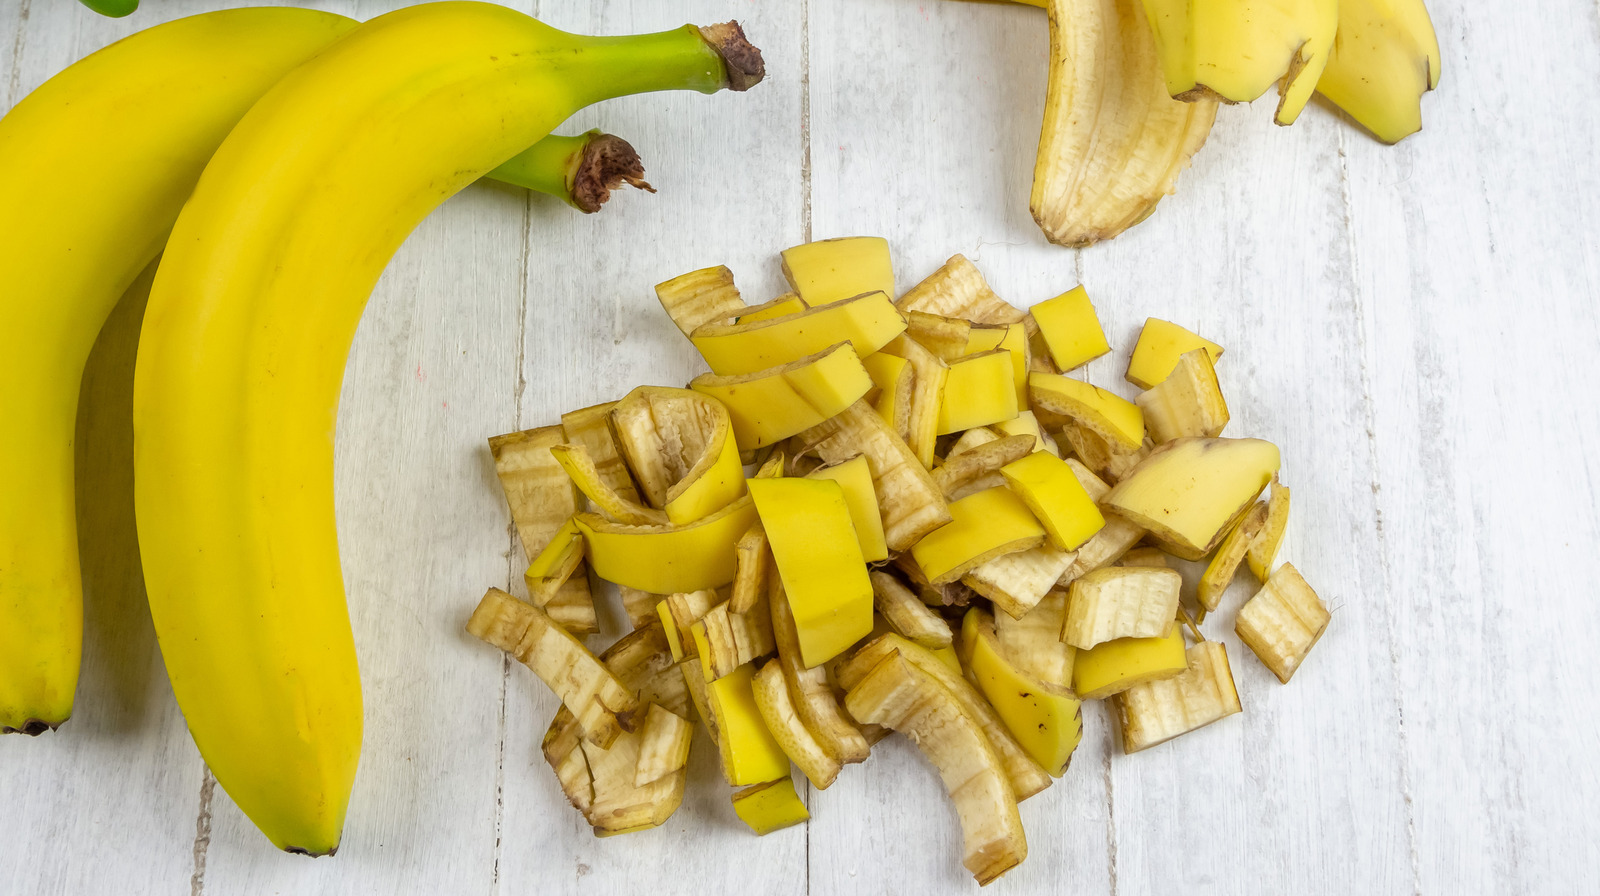 Should Gardeners Really Try TikTok's Banana Peel Water Hack?